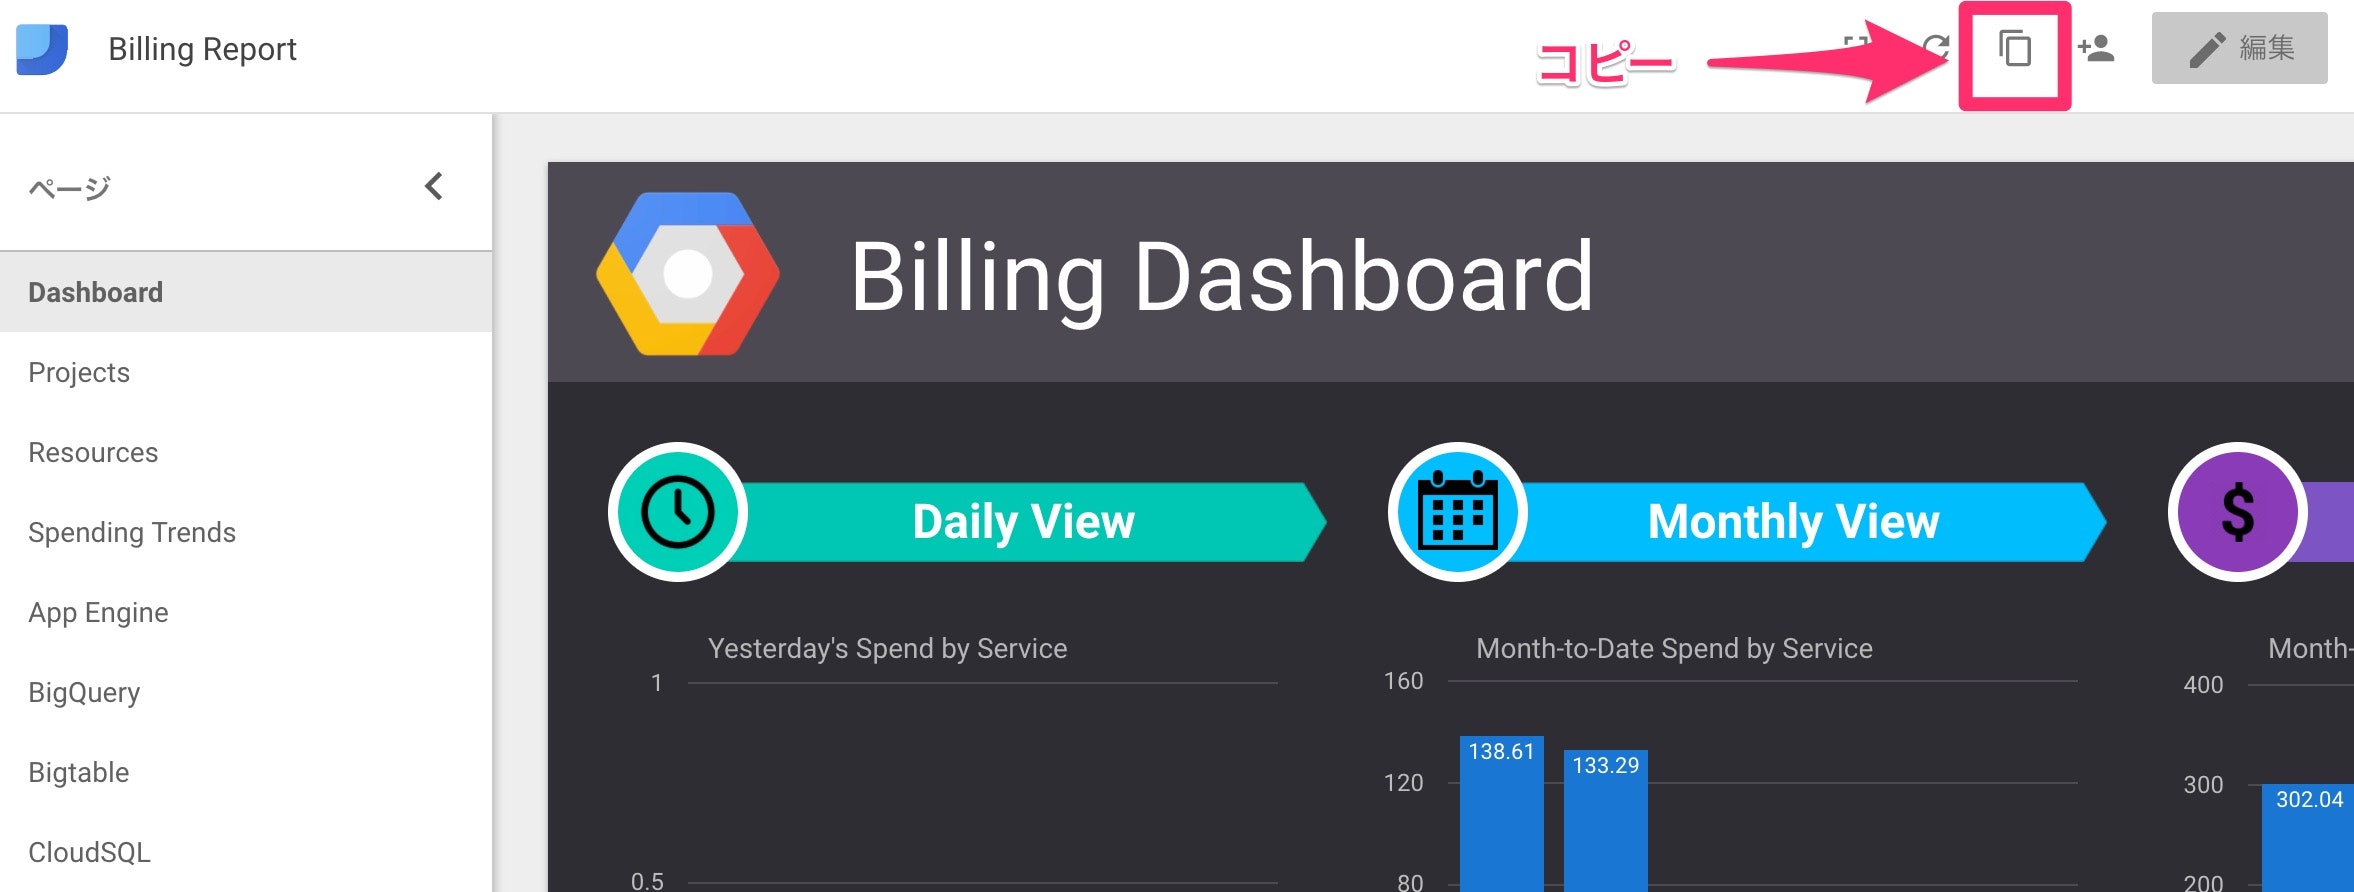 Billing_Report_›_Dashboard.jpg